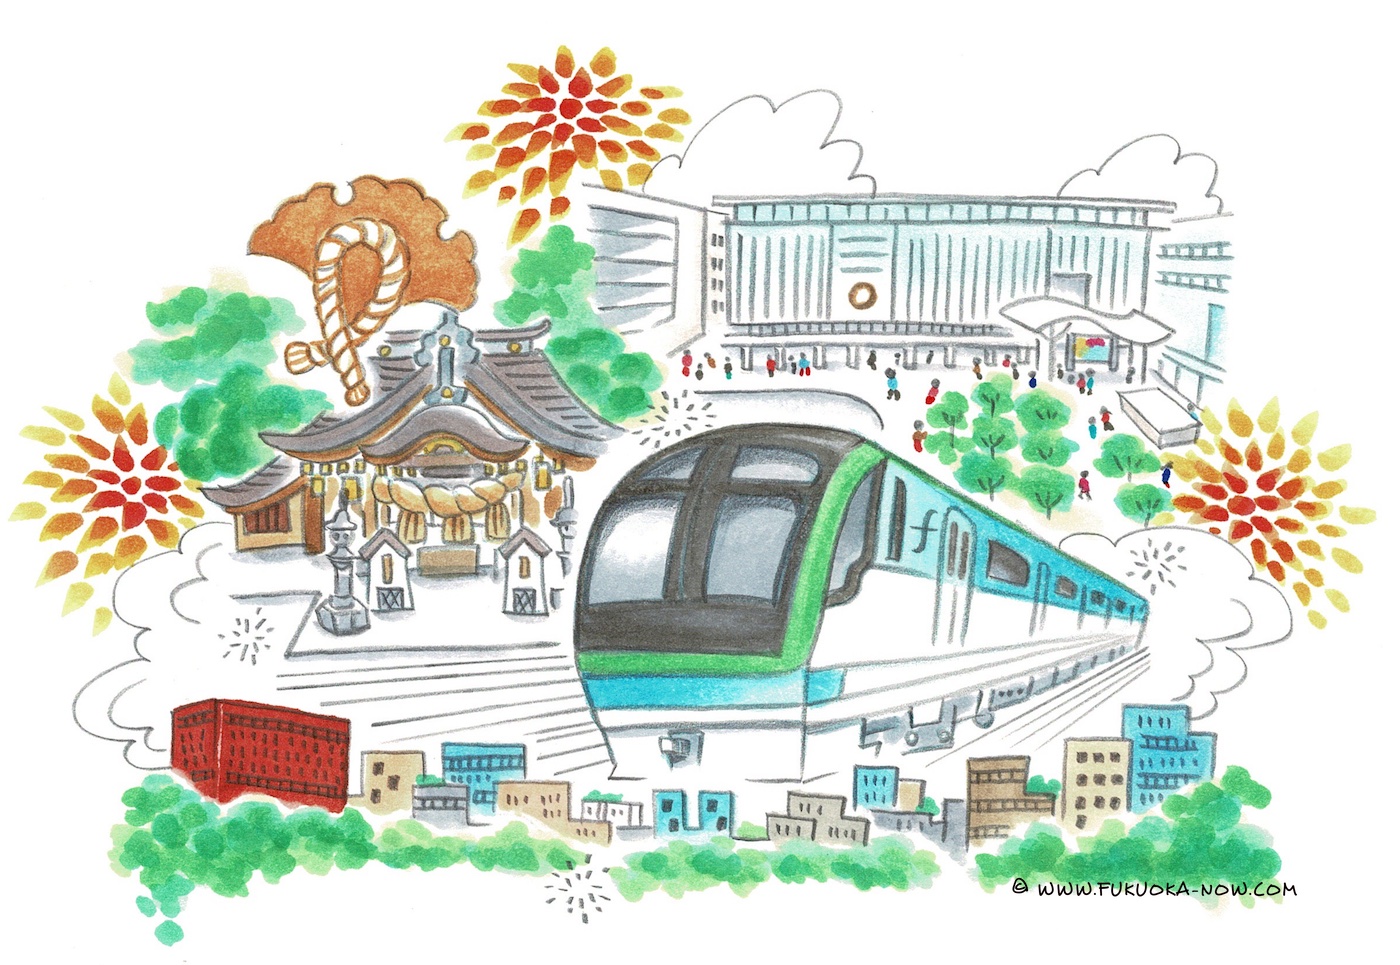 Fukuoka City Subway Nanakuma Line Extension to Make Access More Convenient